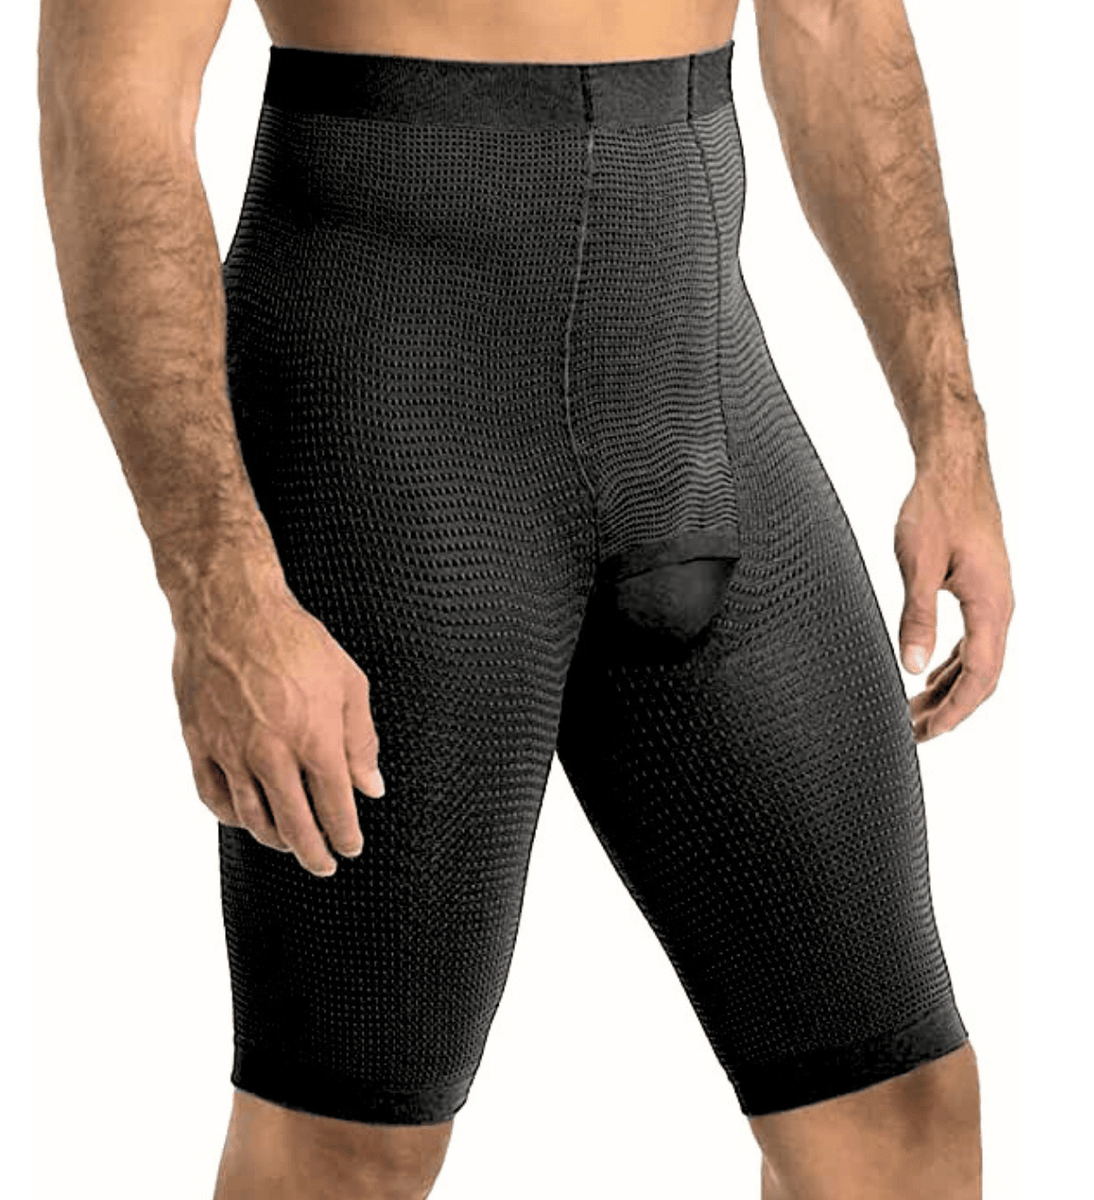 Biker Compression Garment Closed Crotch by Contour